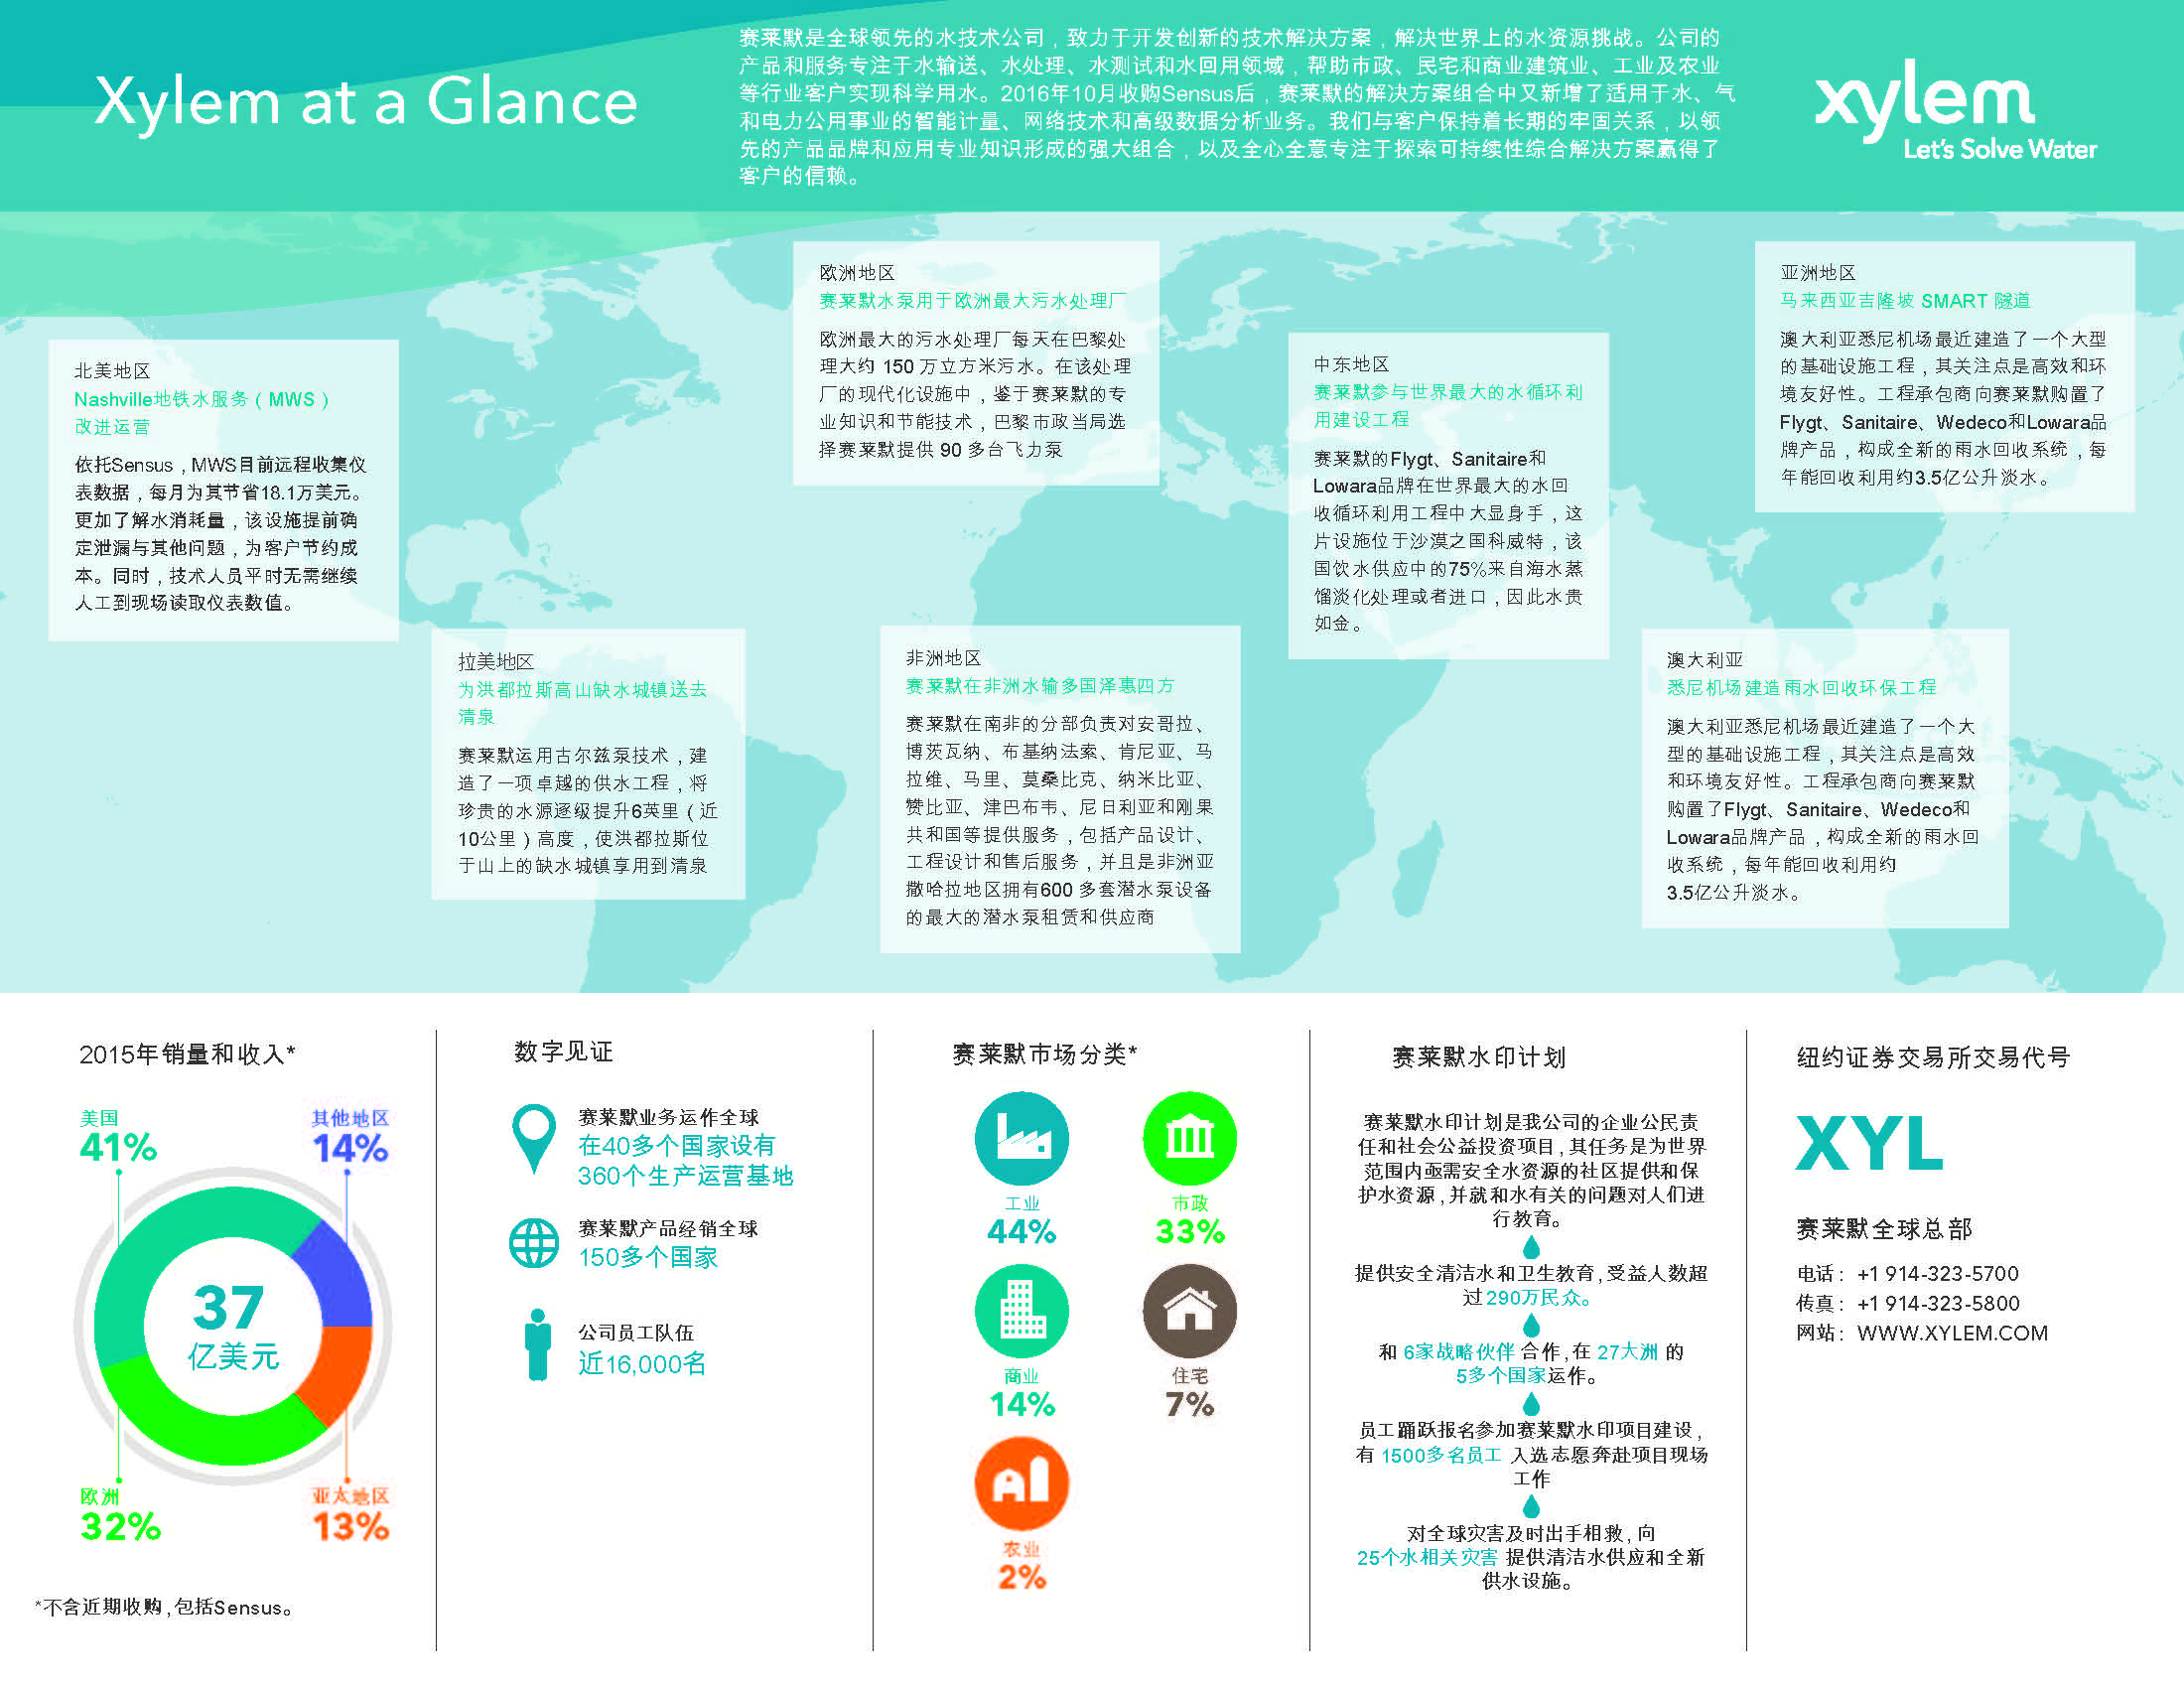 chs_xylem_infographic_8.5x11_dec2016.jpg